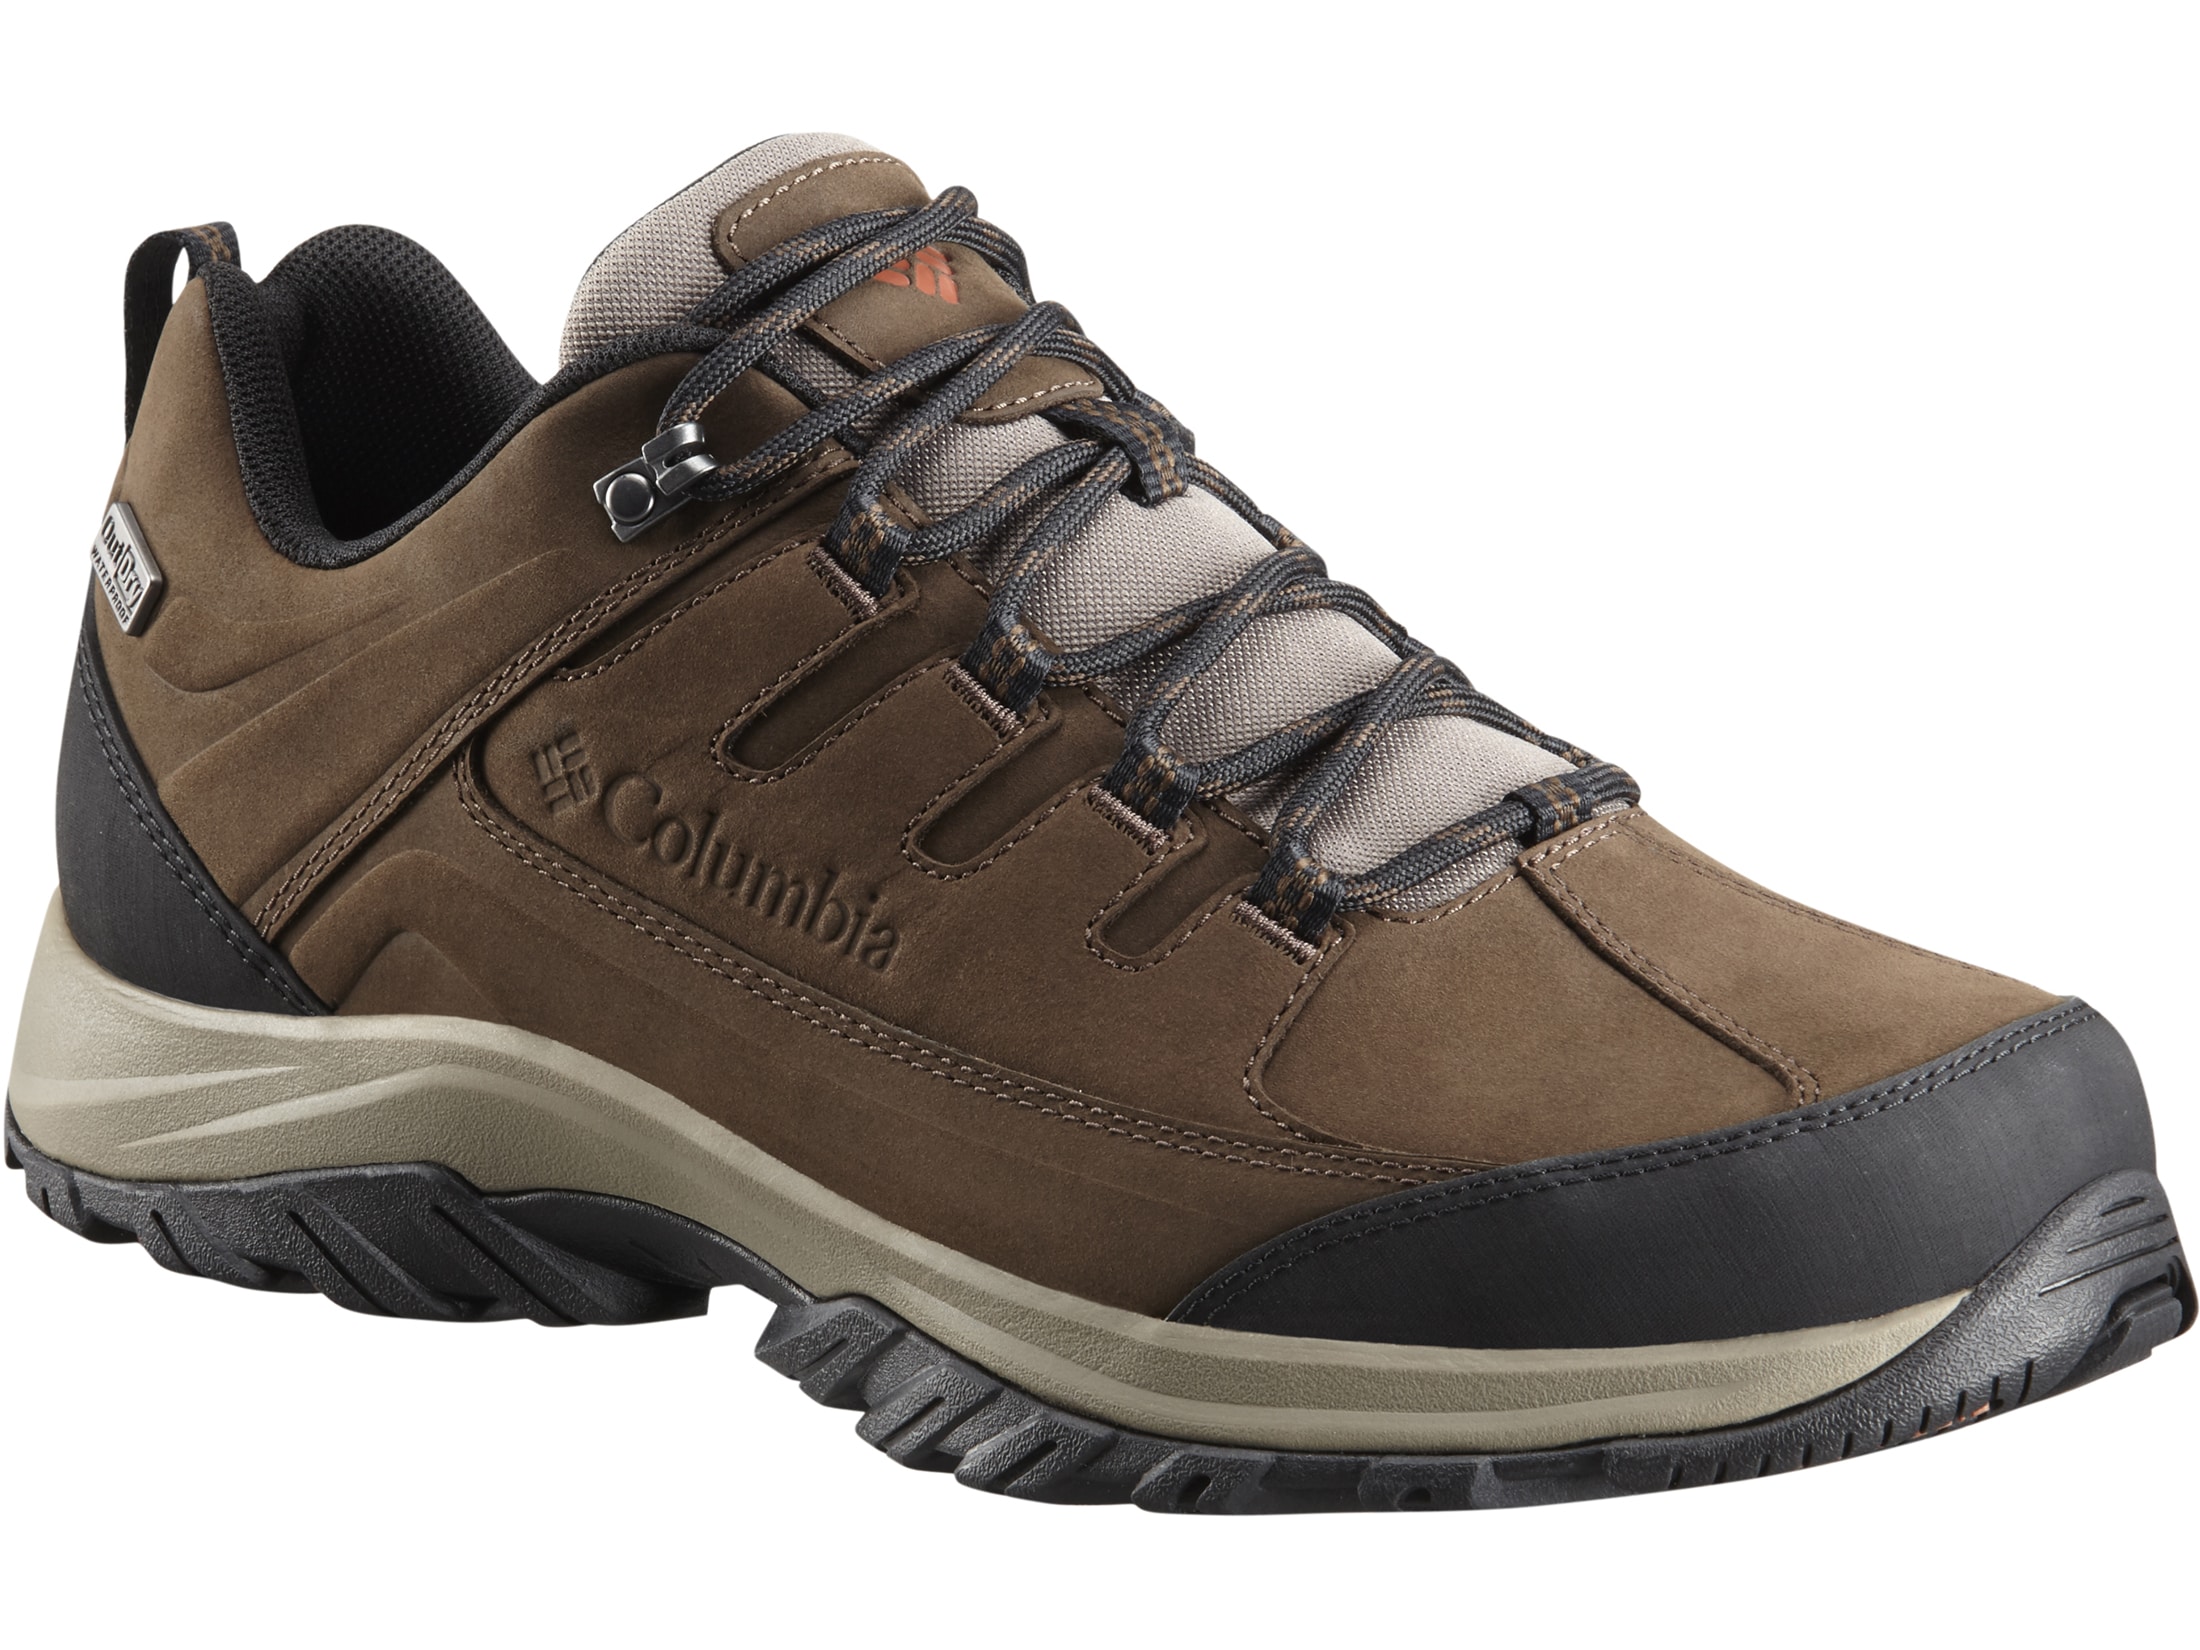 Columbia Terrebonne II Outdry 4 Hiking Shoes Leather/Nylon Black Men's